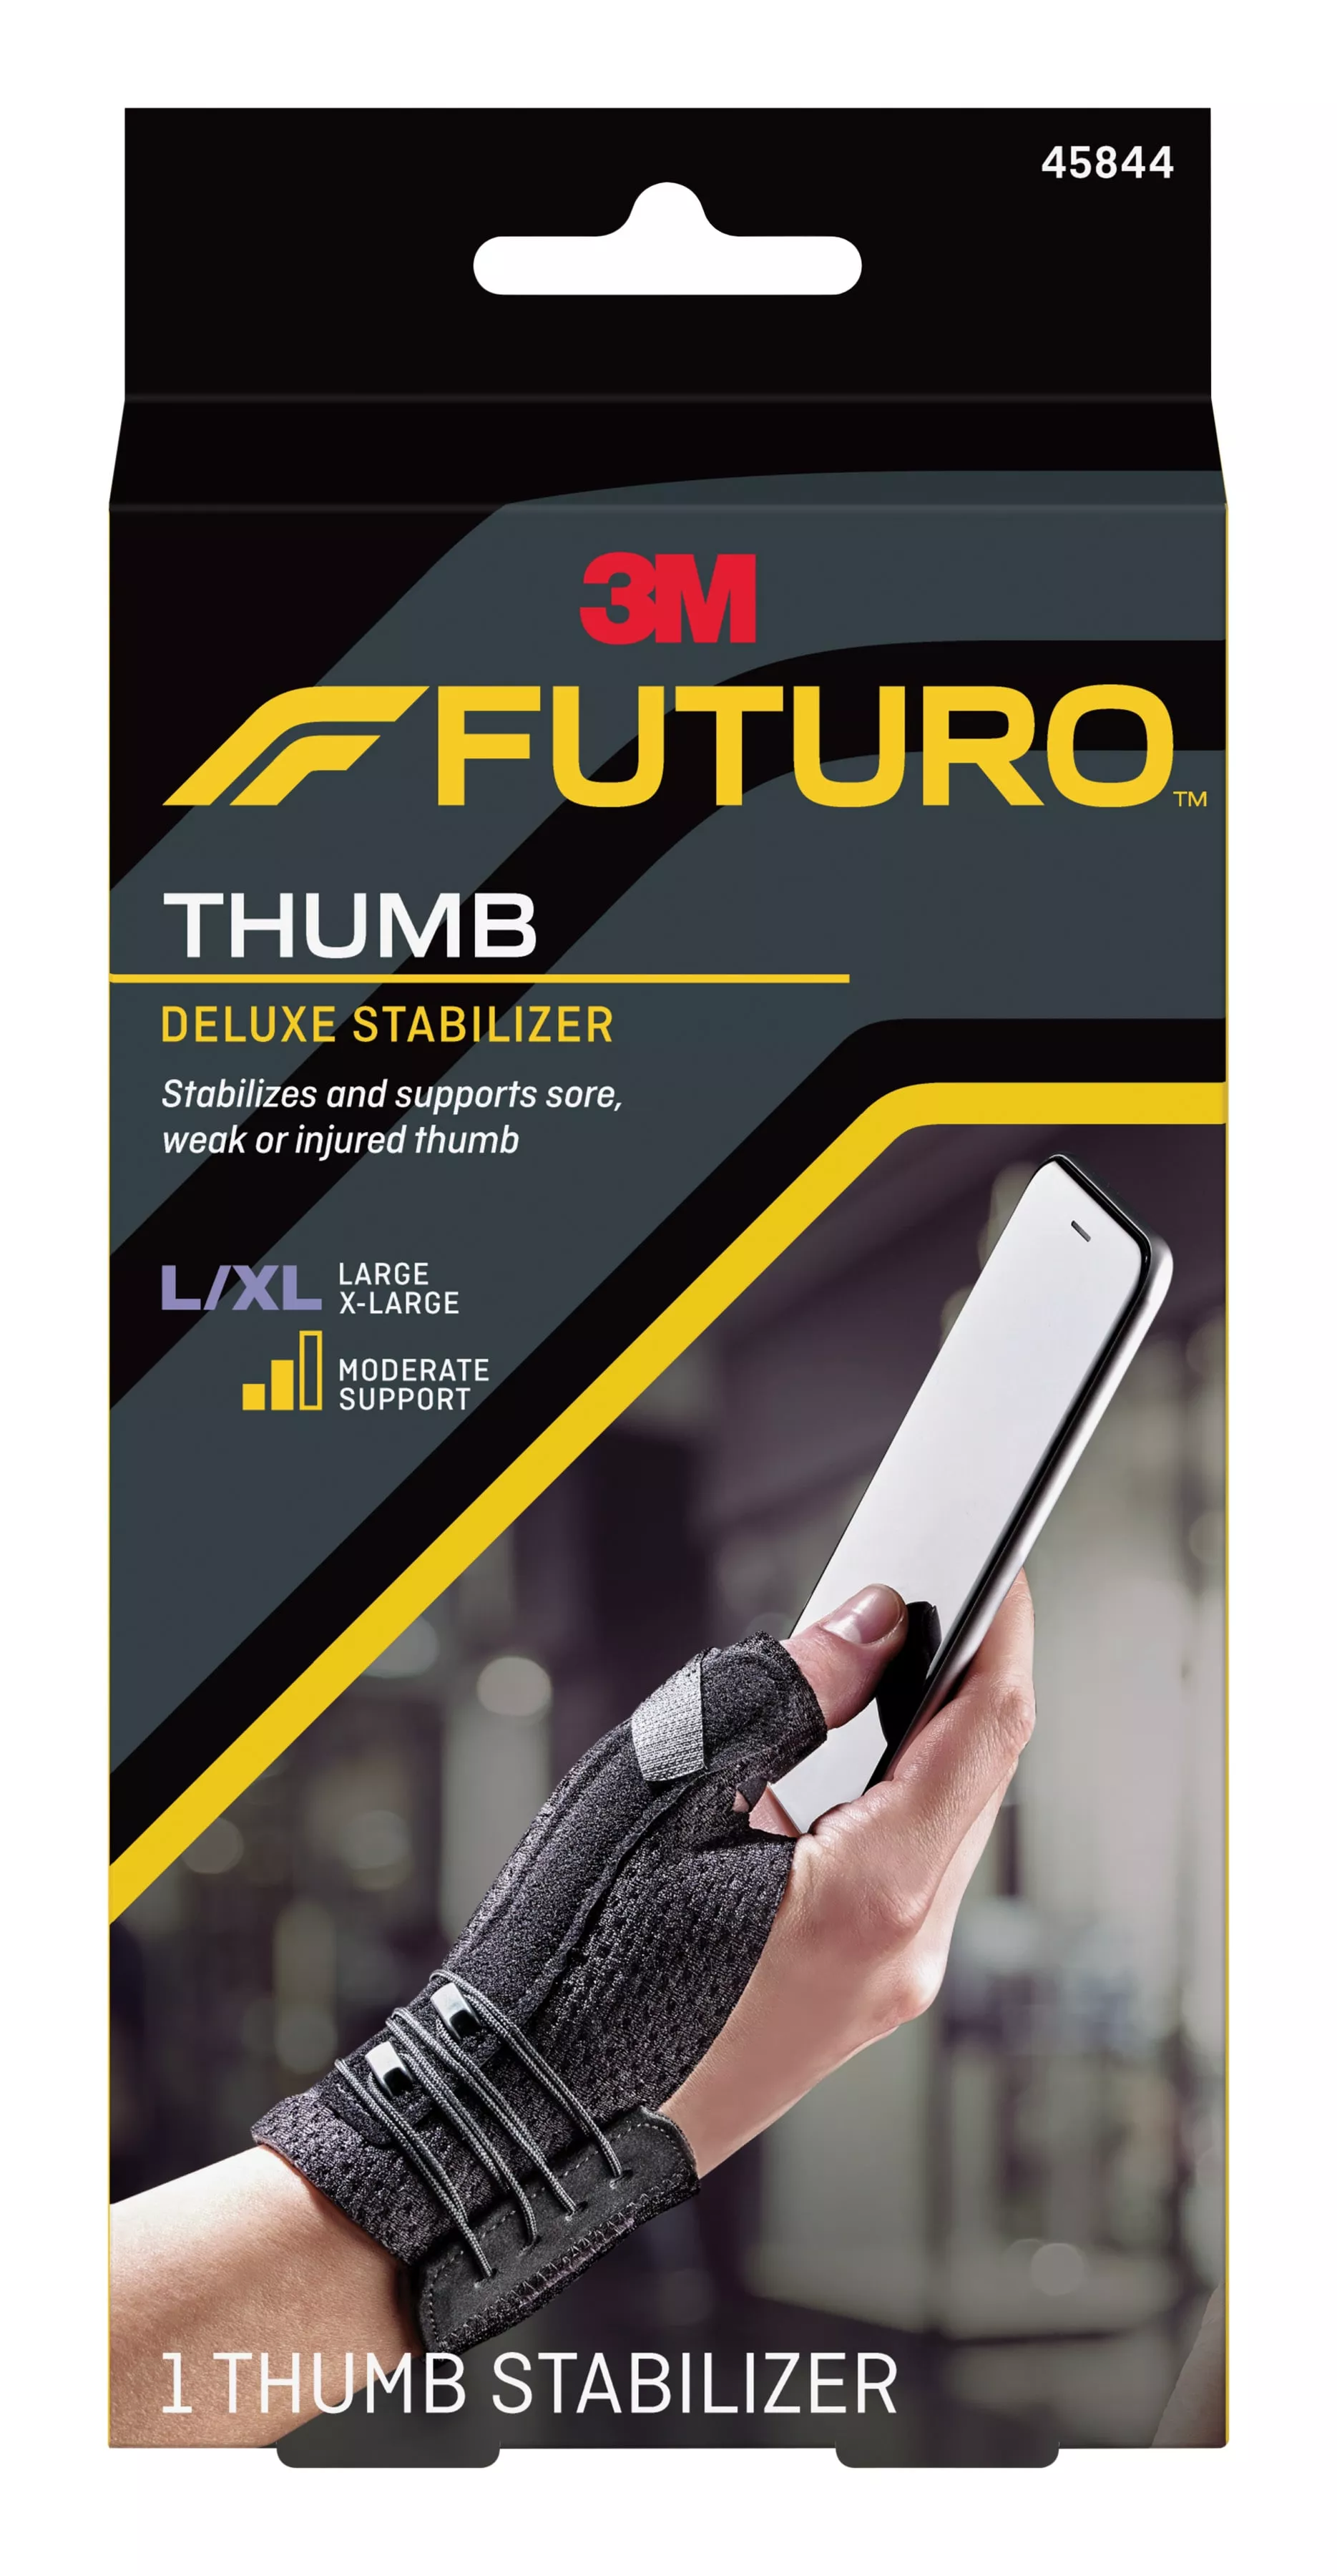 FUTURO™ Thumb Deluxe Stabilizer, 45844ENR, Large/X-Large